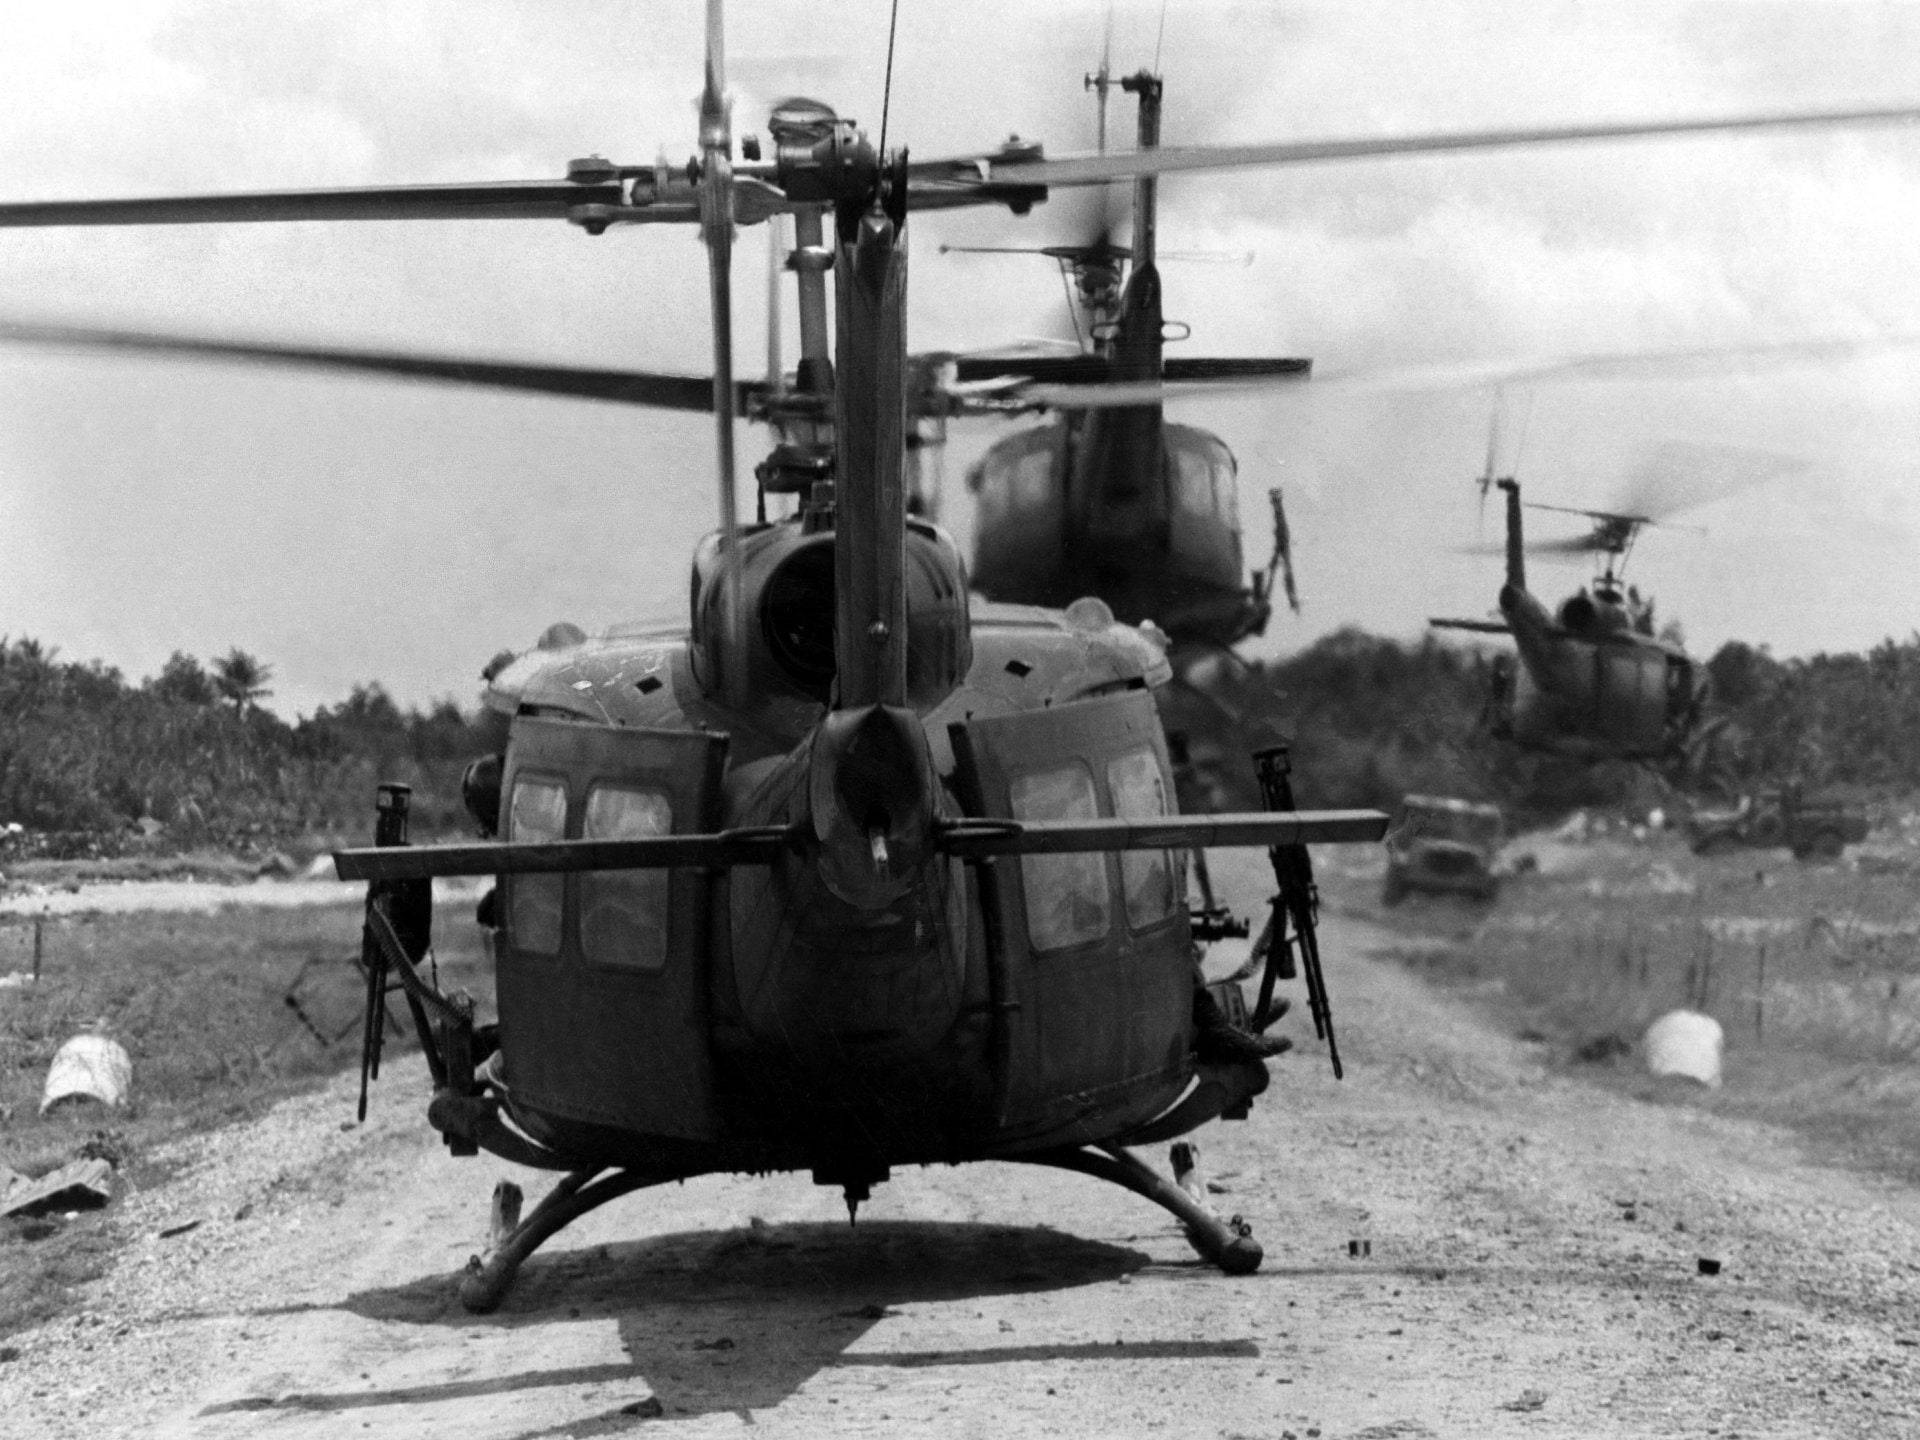 Bell uh-1 ирокез варианты - bell uh-1 iroquois variants